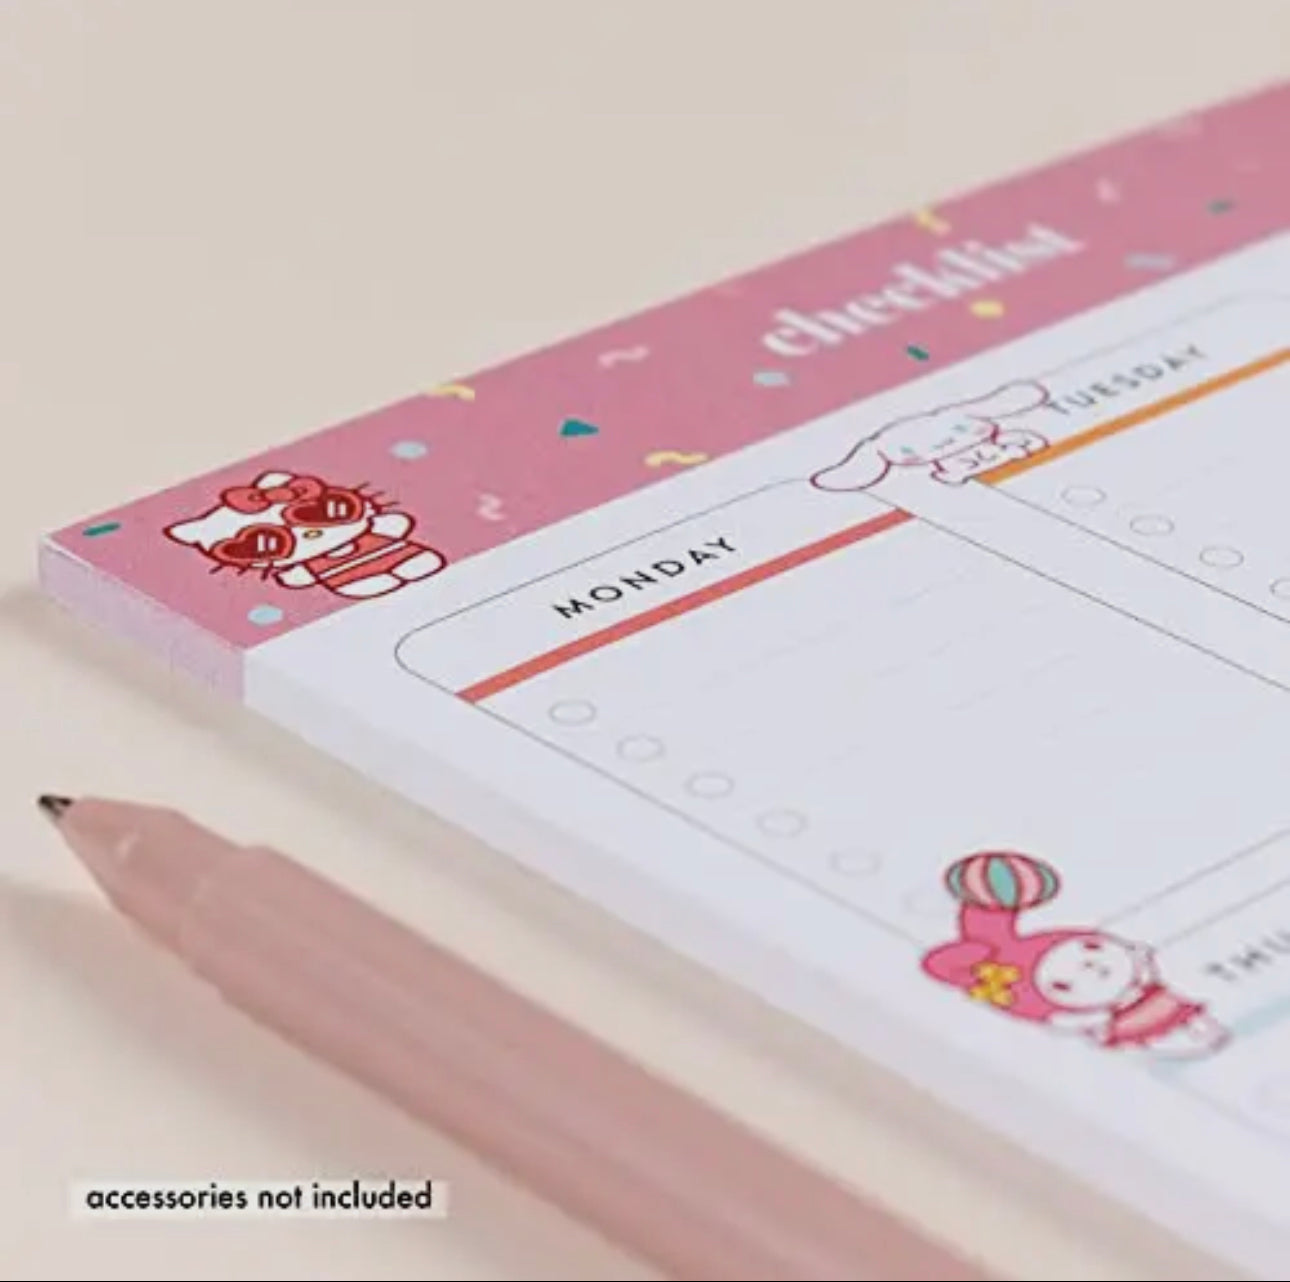 Hello Kitty and Friends x Erin Condren Checkist Notepad